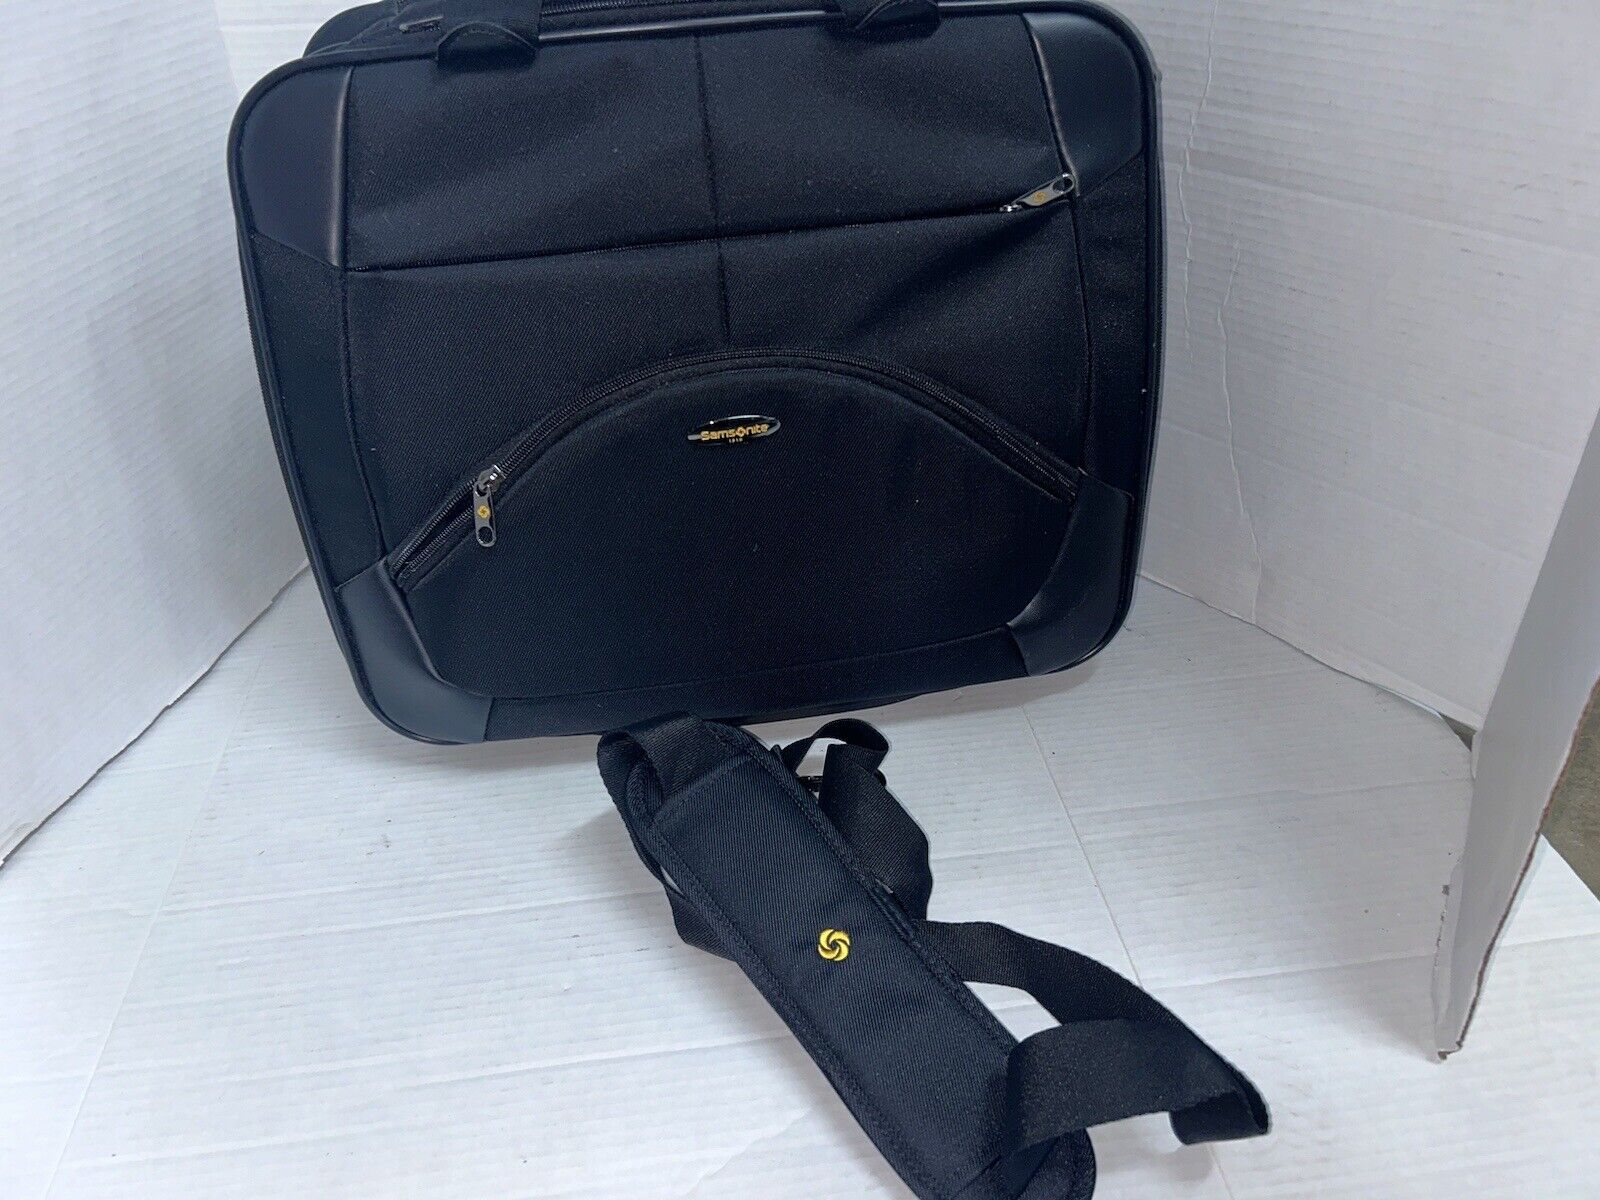 Samsonite Laptop Zipper Black Nylon Luggage with Business Bag Strap